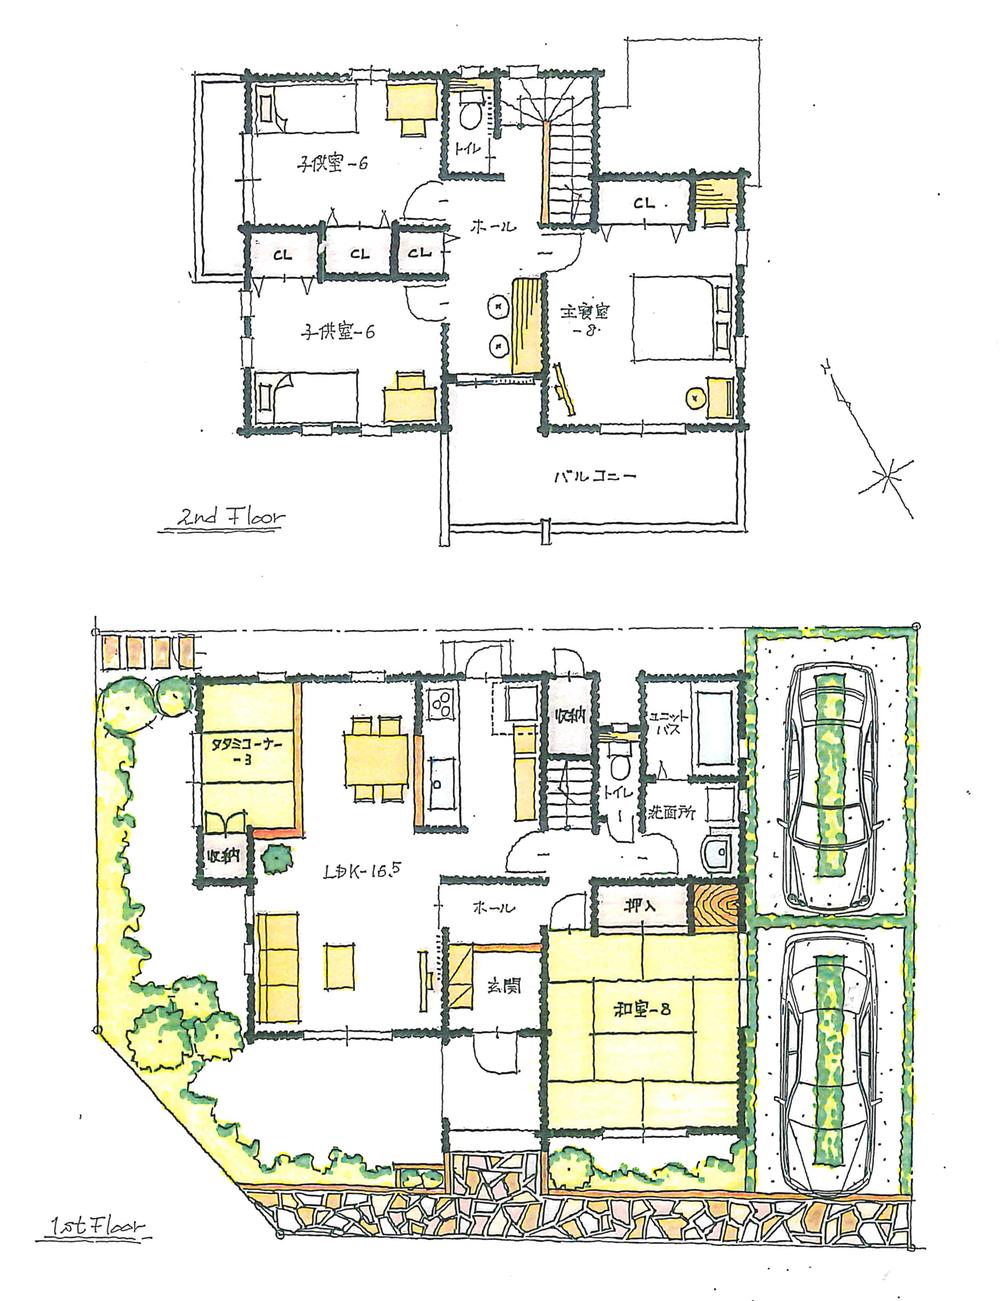 Building plan example (Perth ・ Introspection). Building plan example Building price 19,860,000 yen, Building area 118.41 sq m